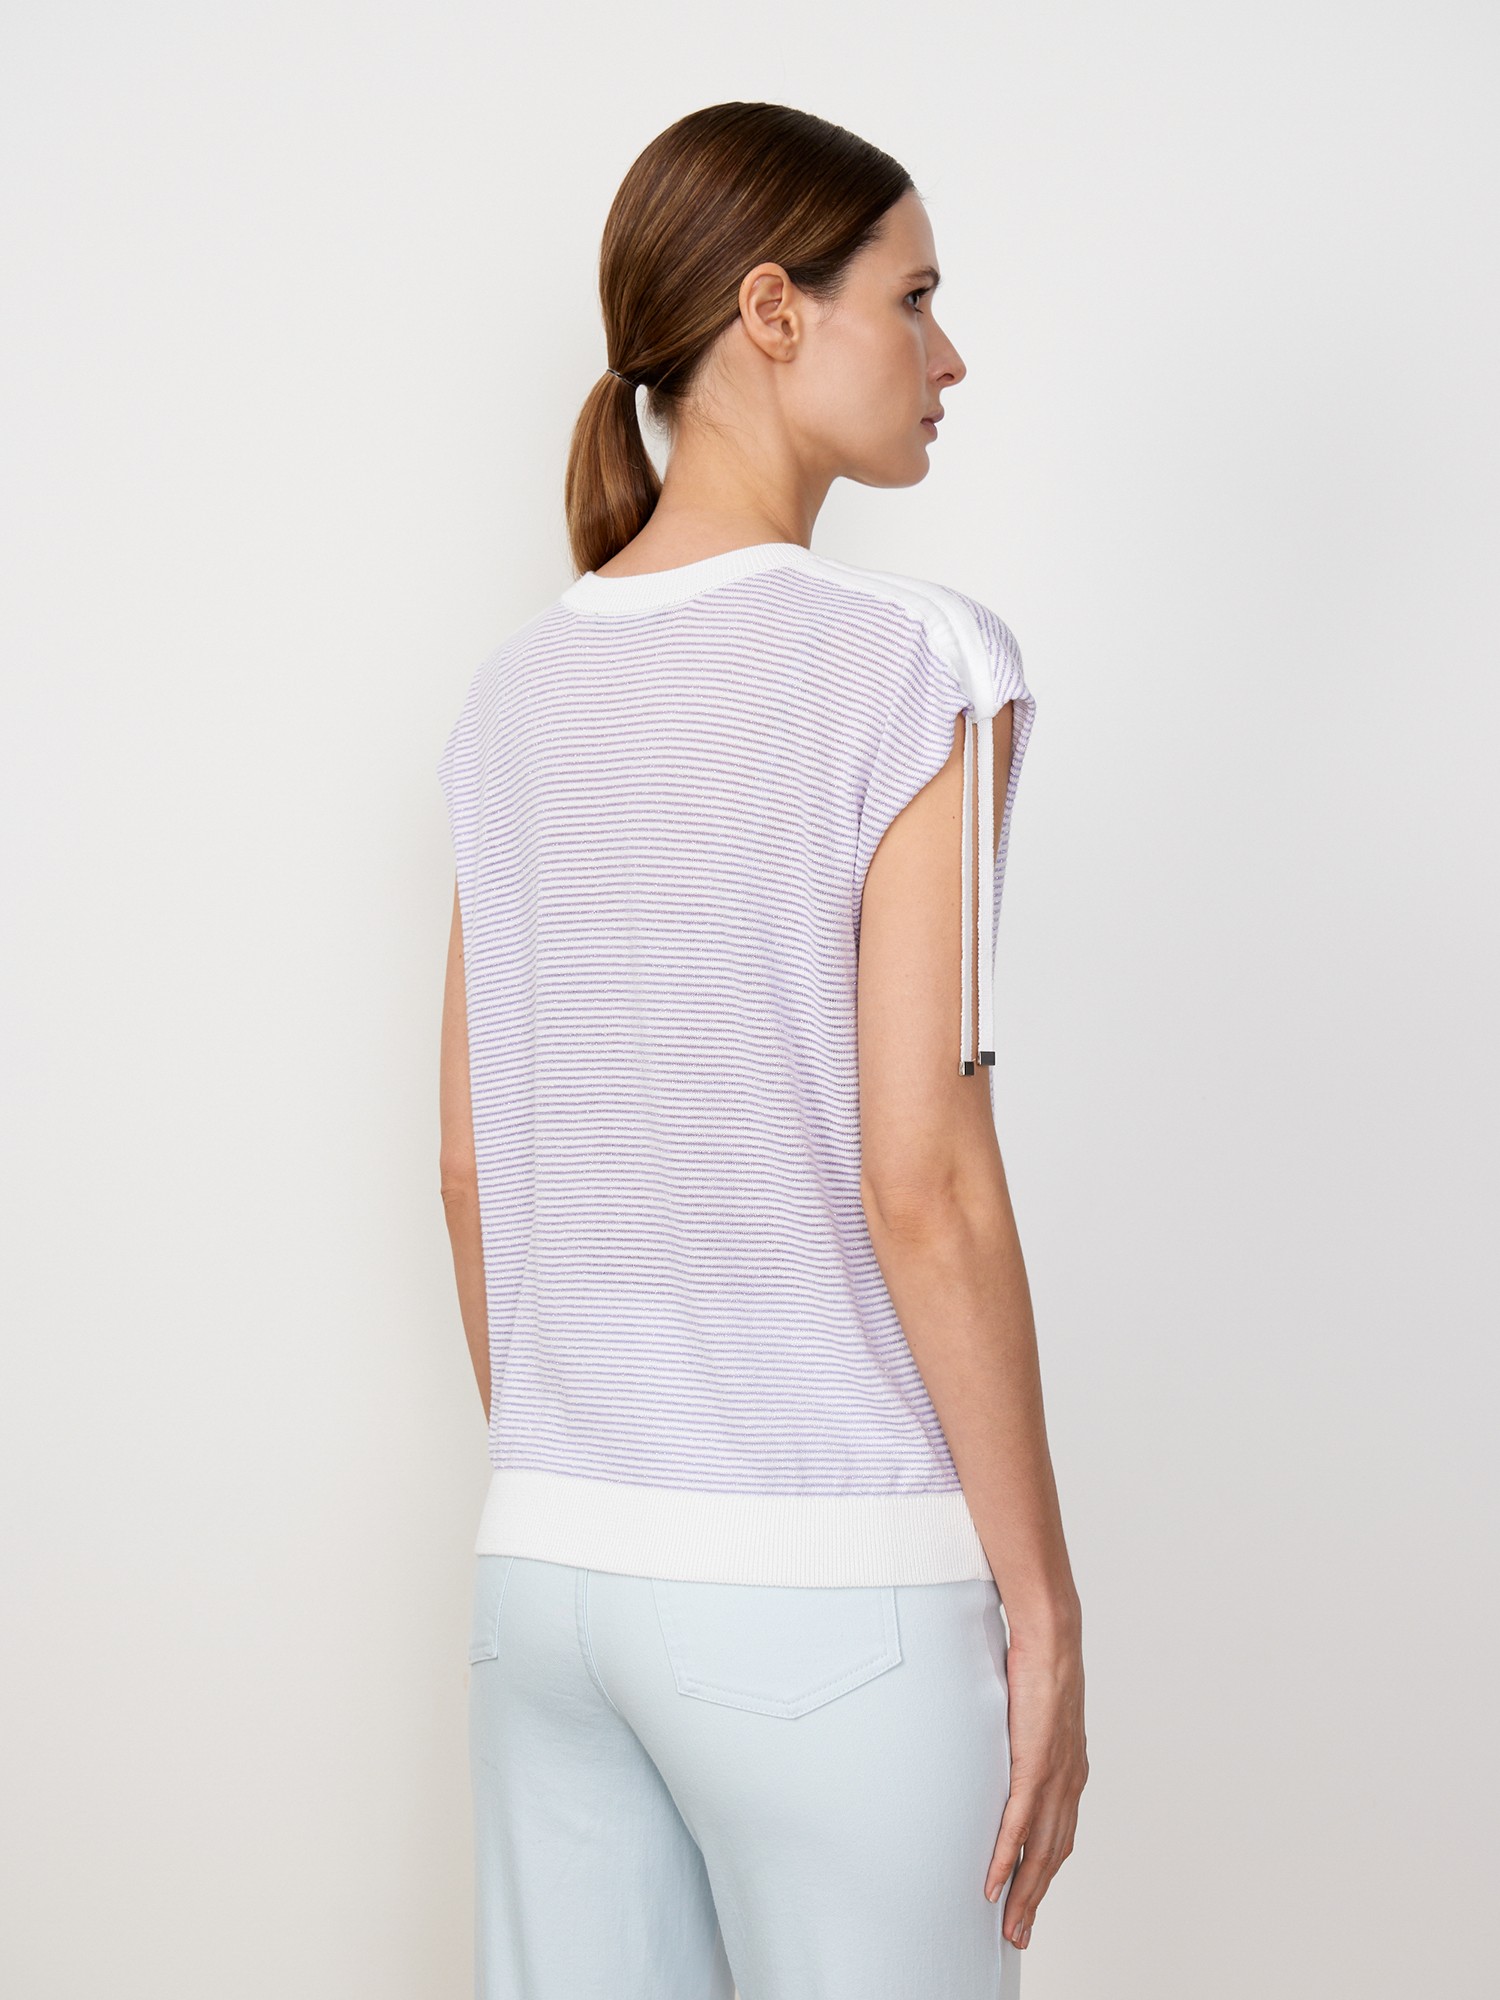 Вязаная блуза с люрексом Elis BL1054V, цвет фиолетовый, размер 48 - фото 4